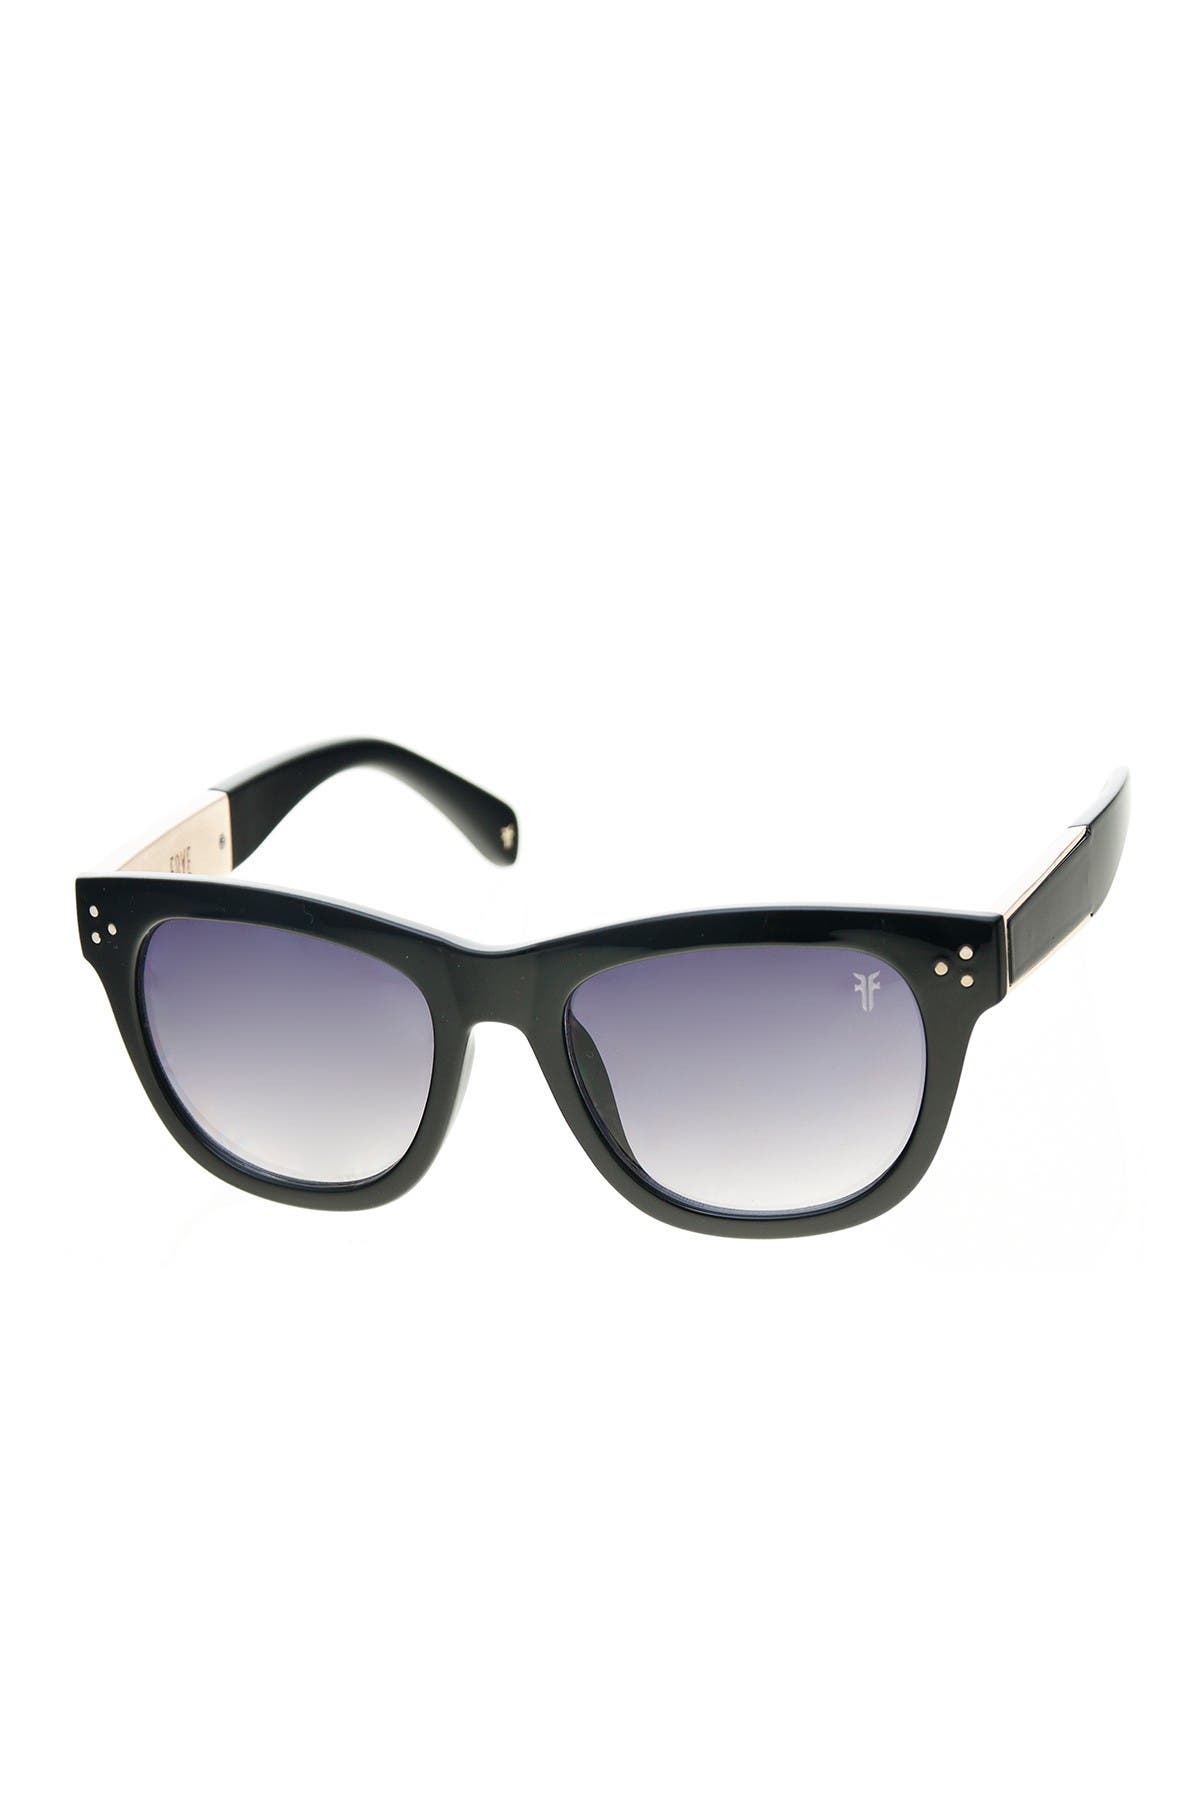 Frye | 54mm Polarized Square Sunglasses | Nordstrom Rack